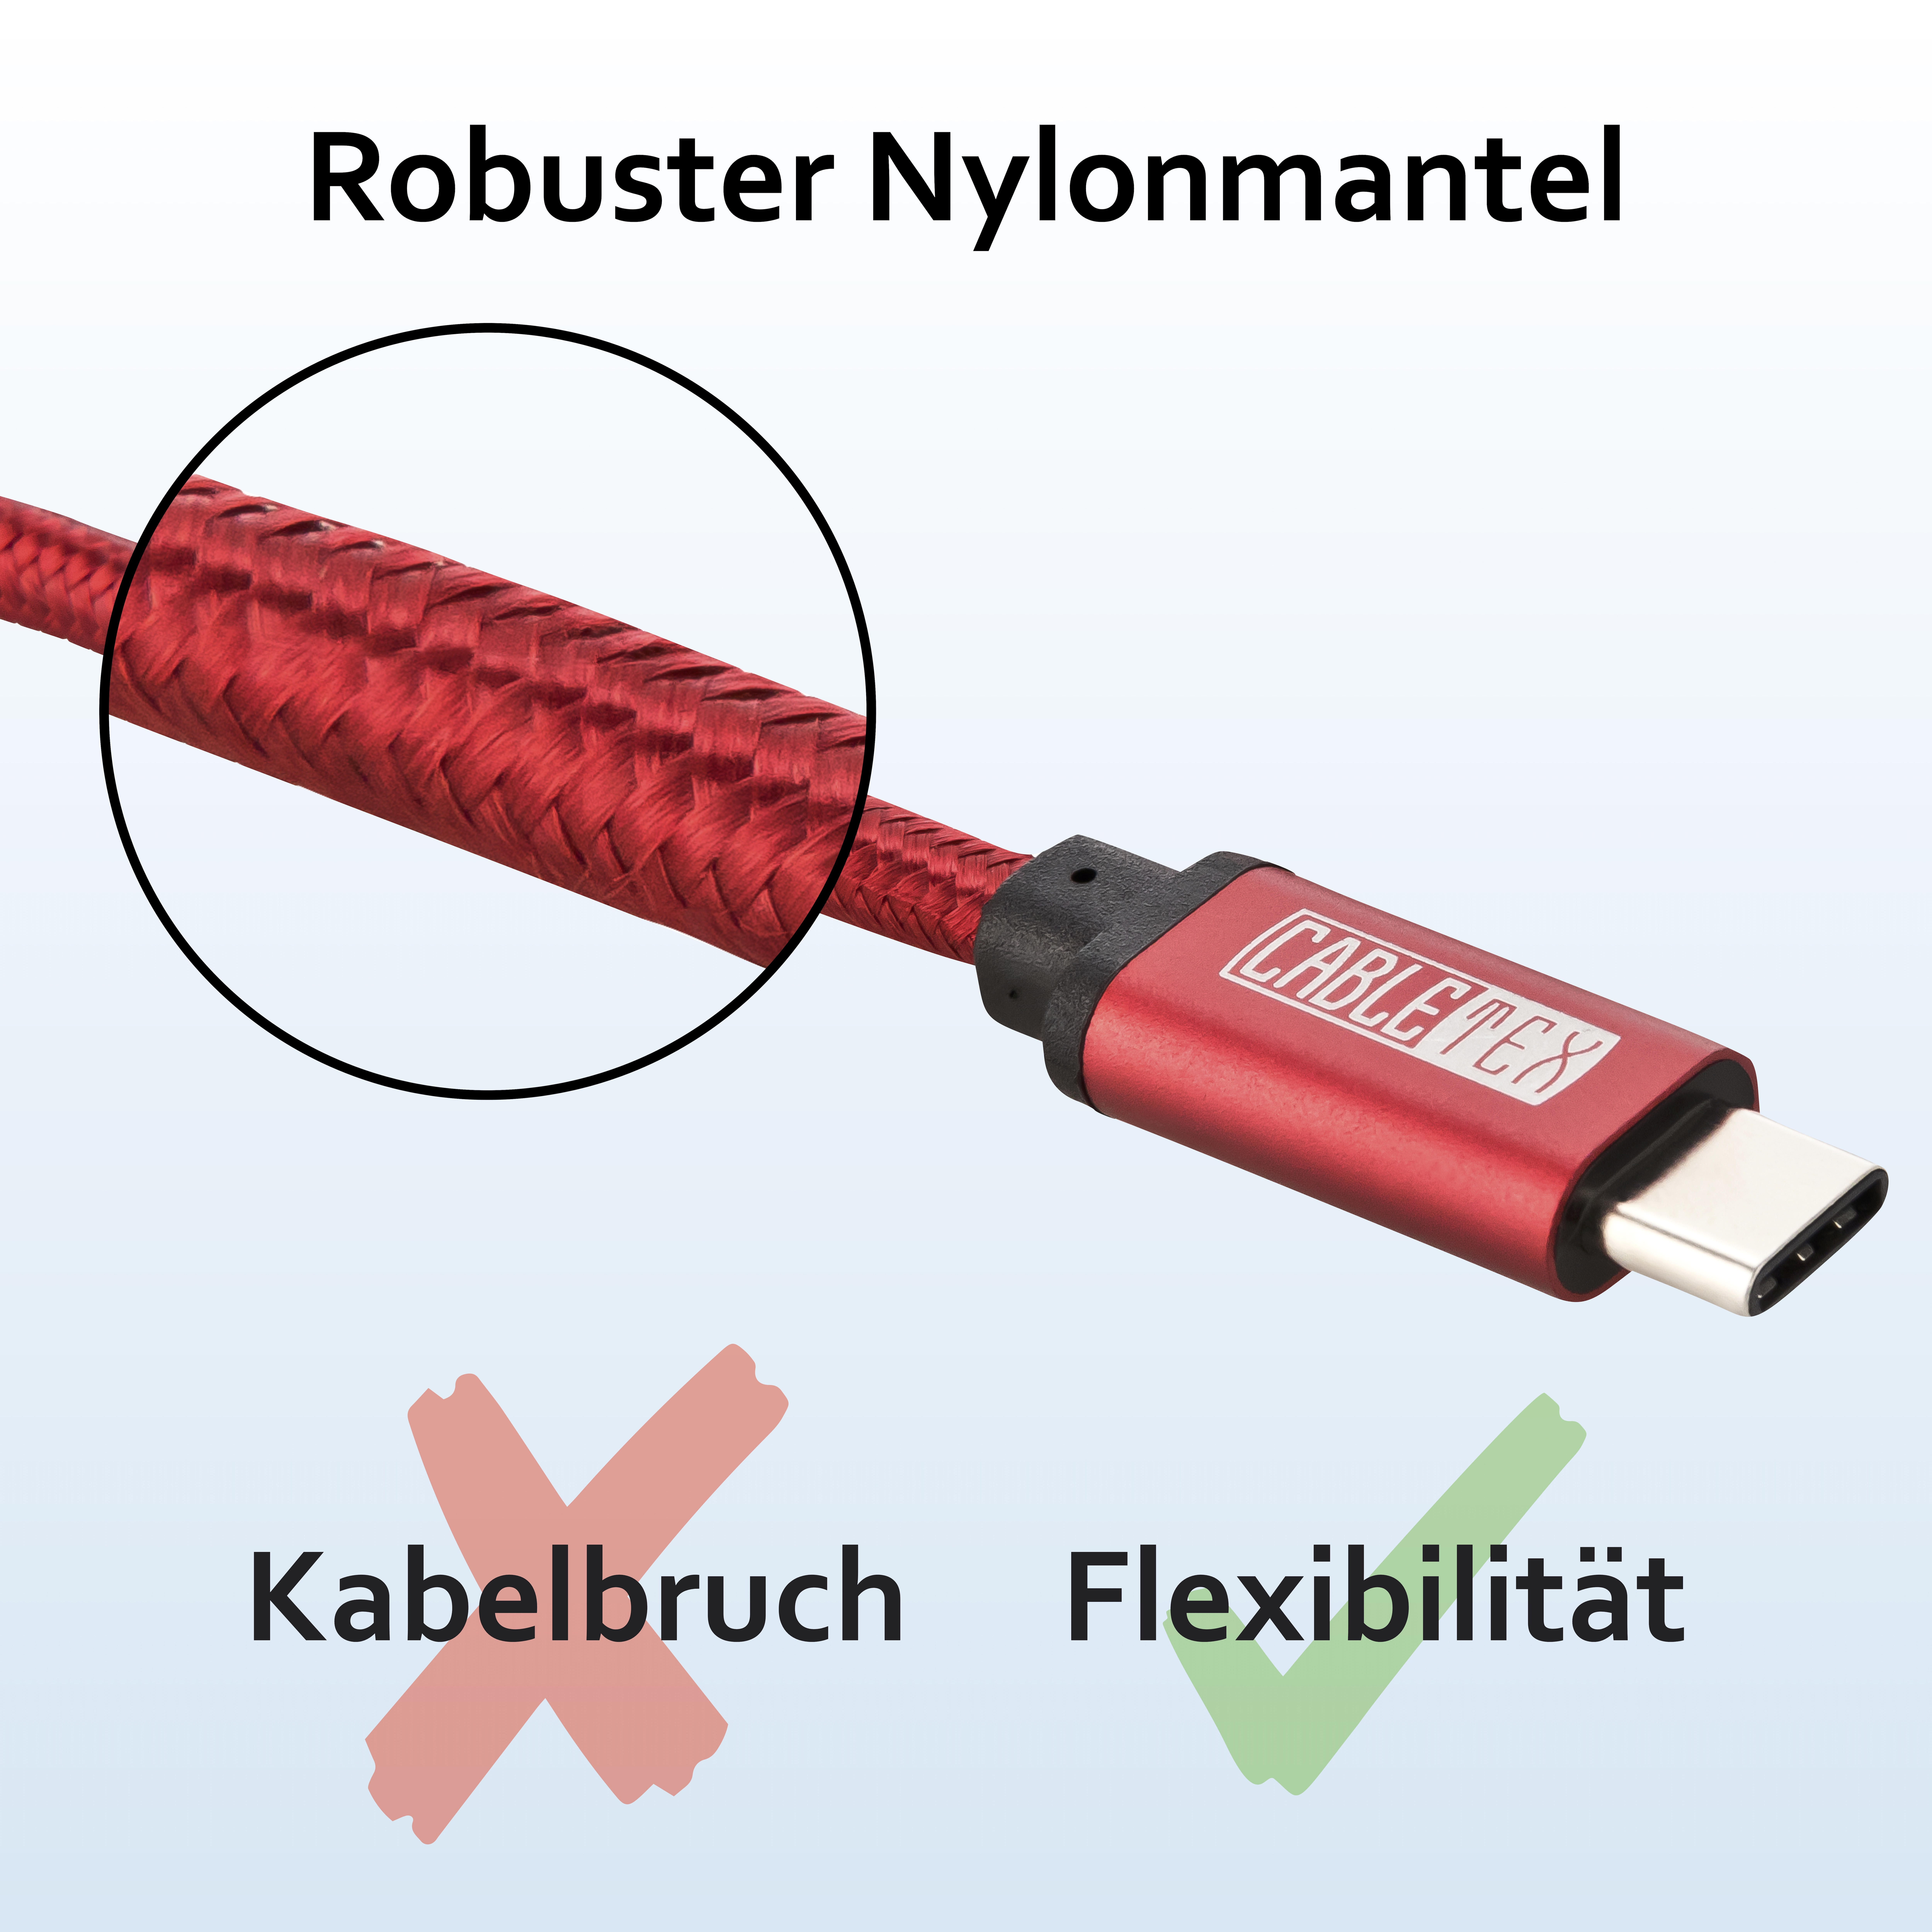 CABLETEX USB C Kabel Schwarz Rot USB-Kabel, 